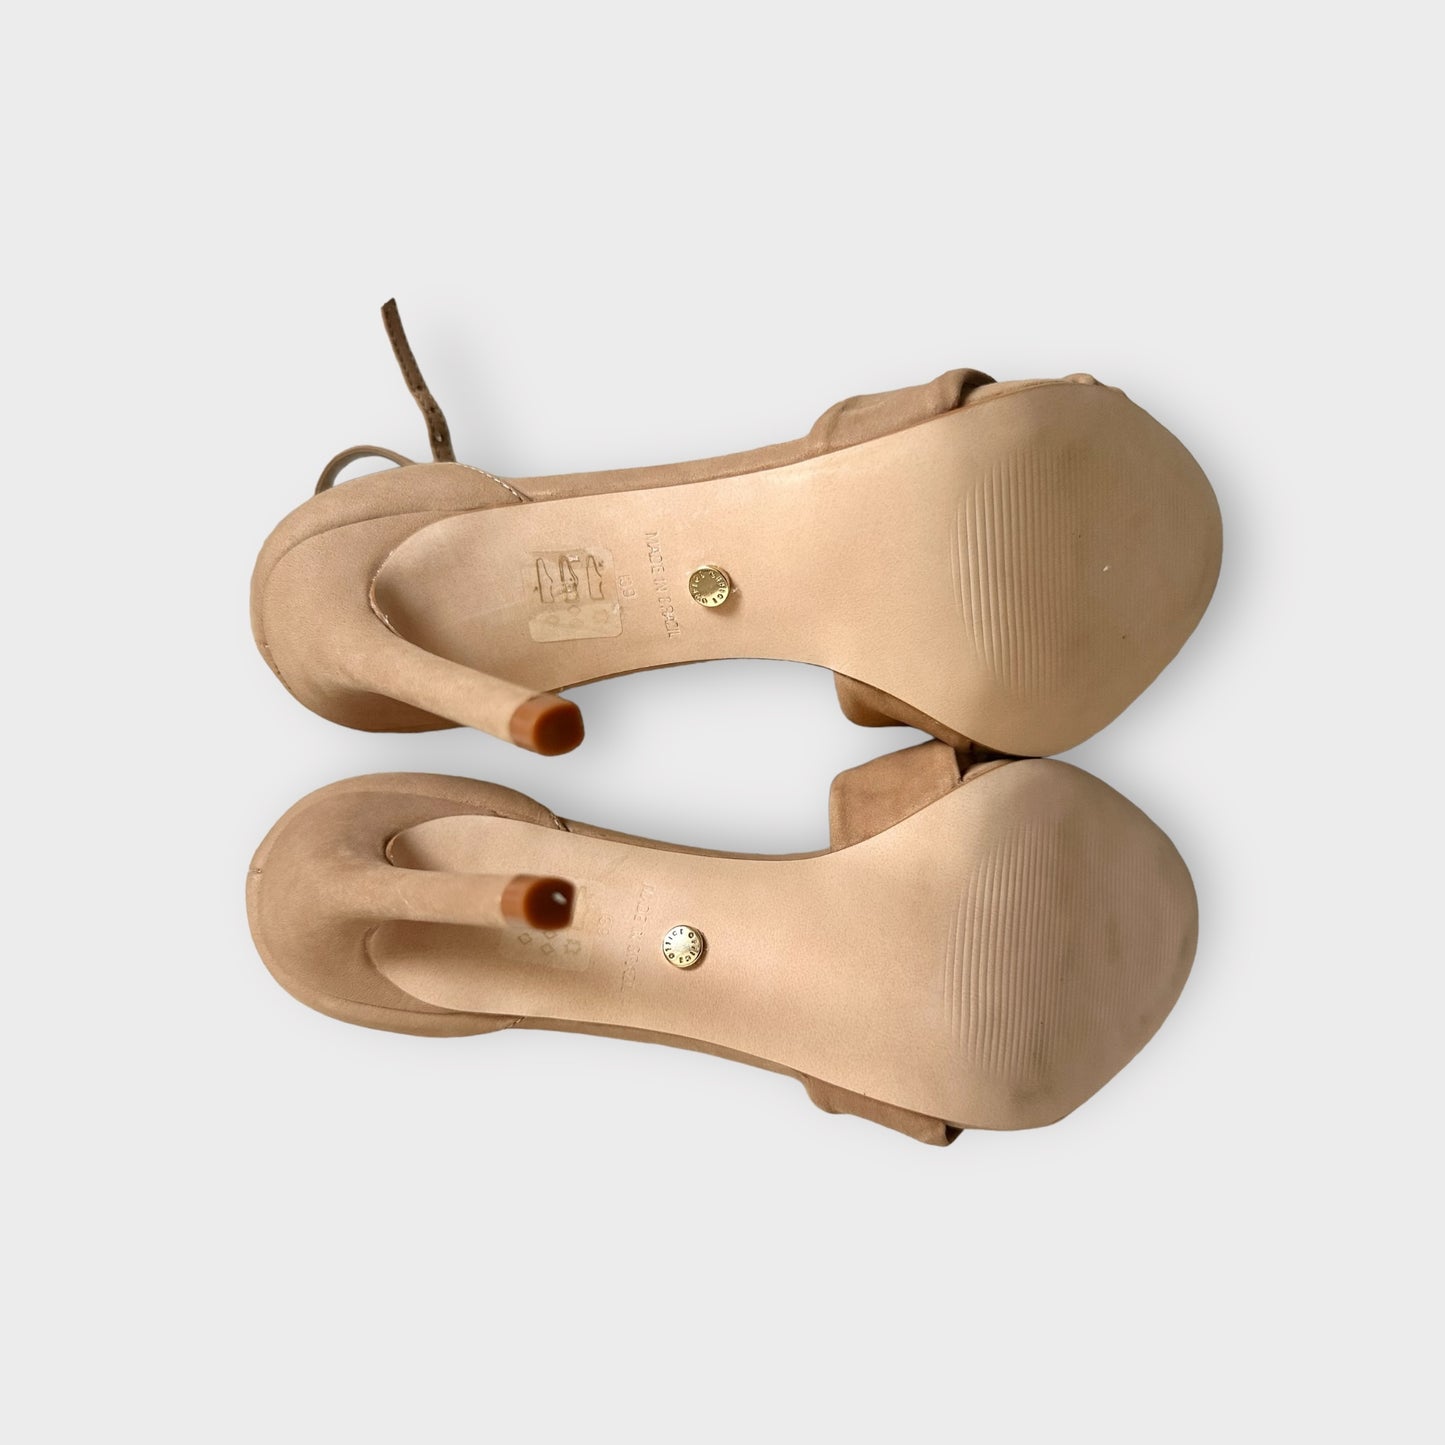 Office beige leather sandals heels UK 6 EU 39 new bnwot